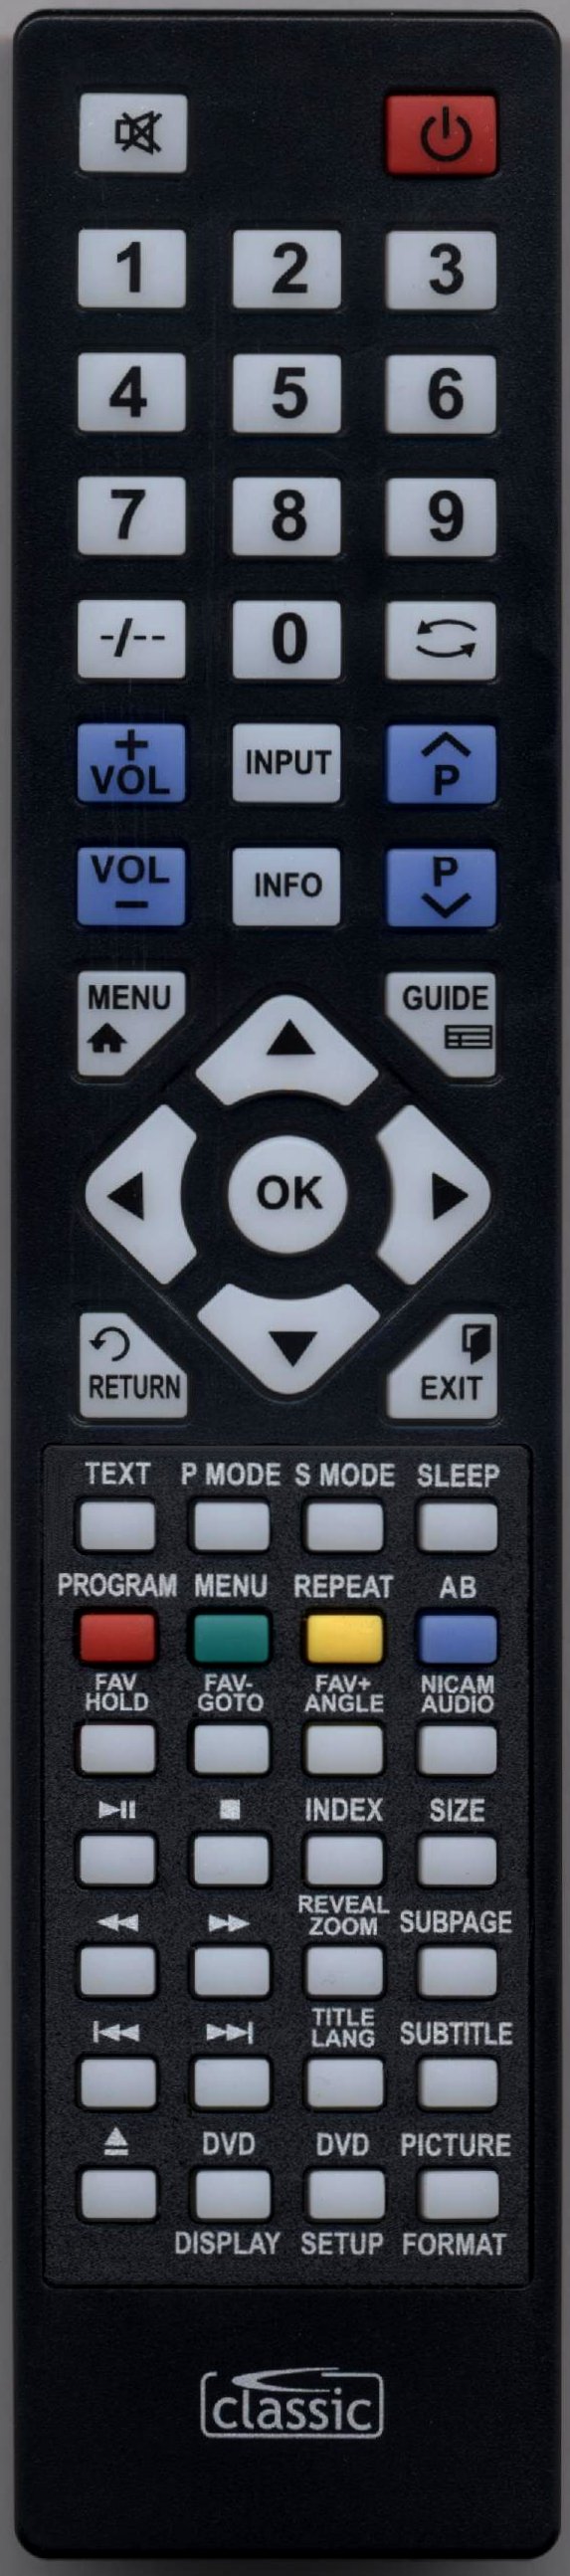 UMC X19/16B-GB-TCD-UK Remote Control